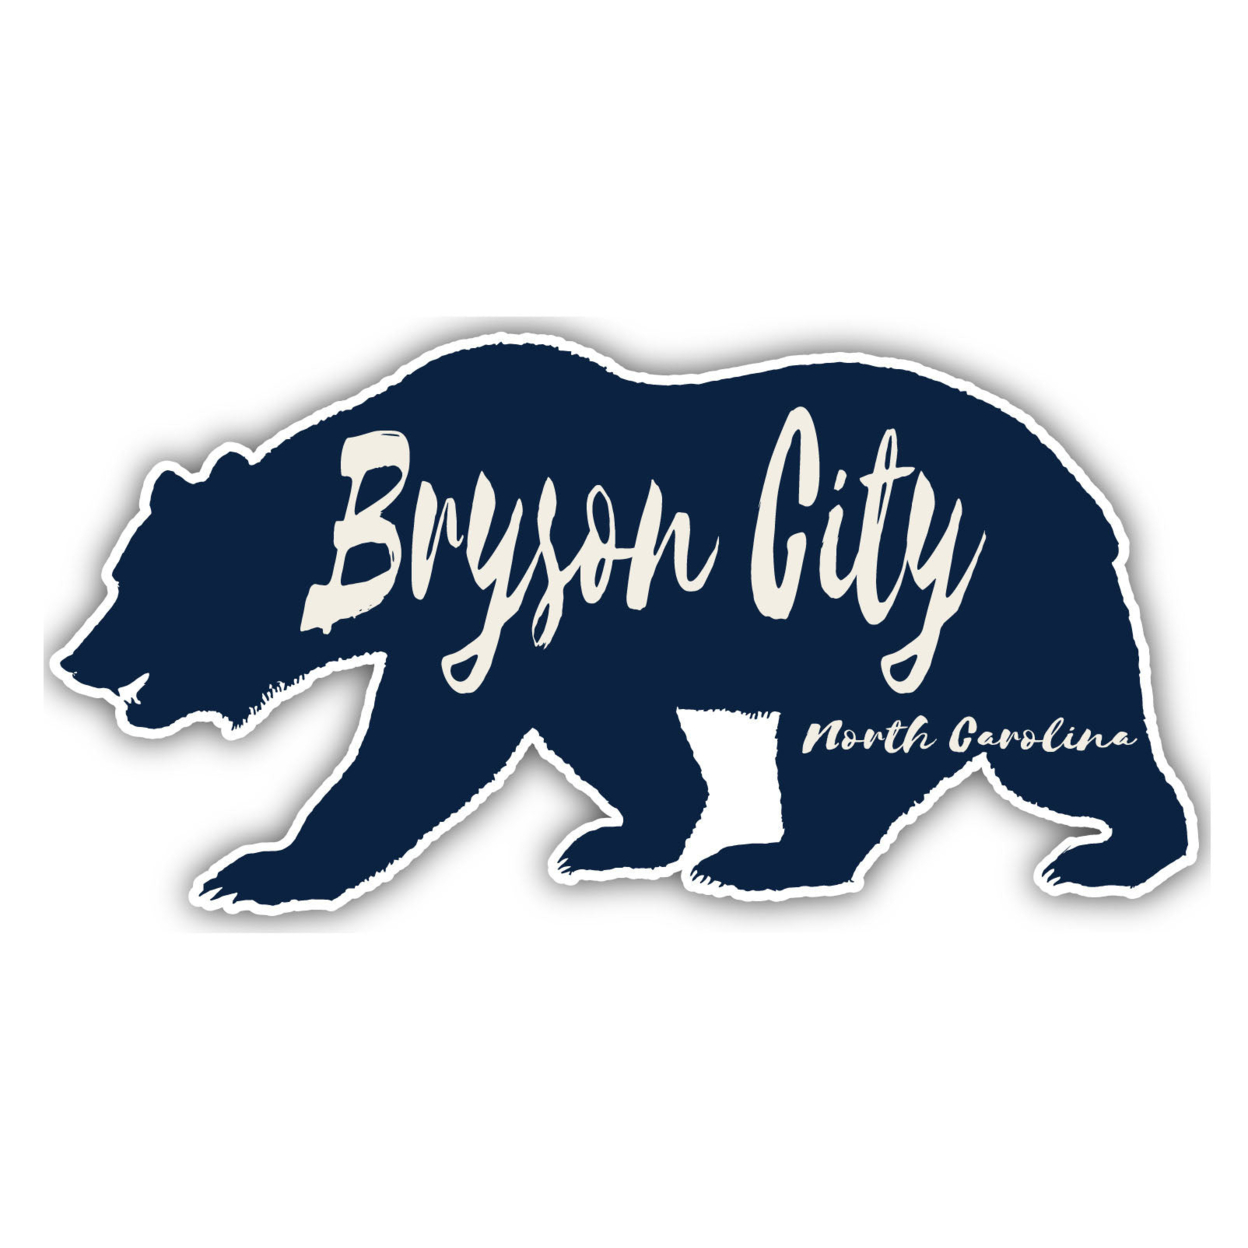 Bryson City North Carolina Souvenir Decorative Stickers (Choose Theme And Size) - 4-Pack, 10-Inch, Bear